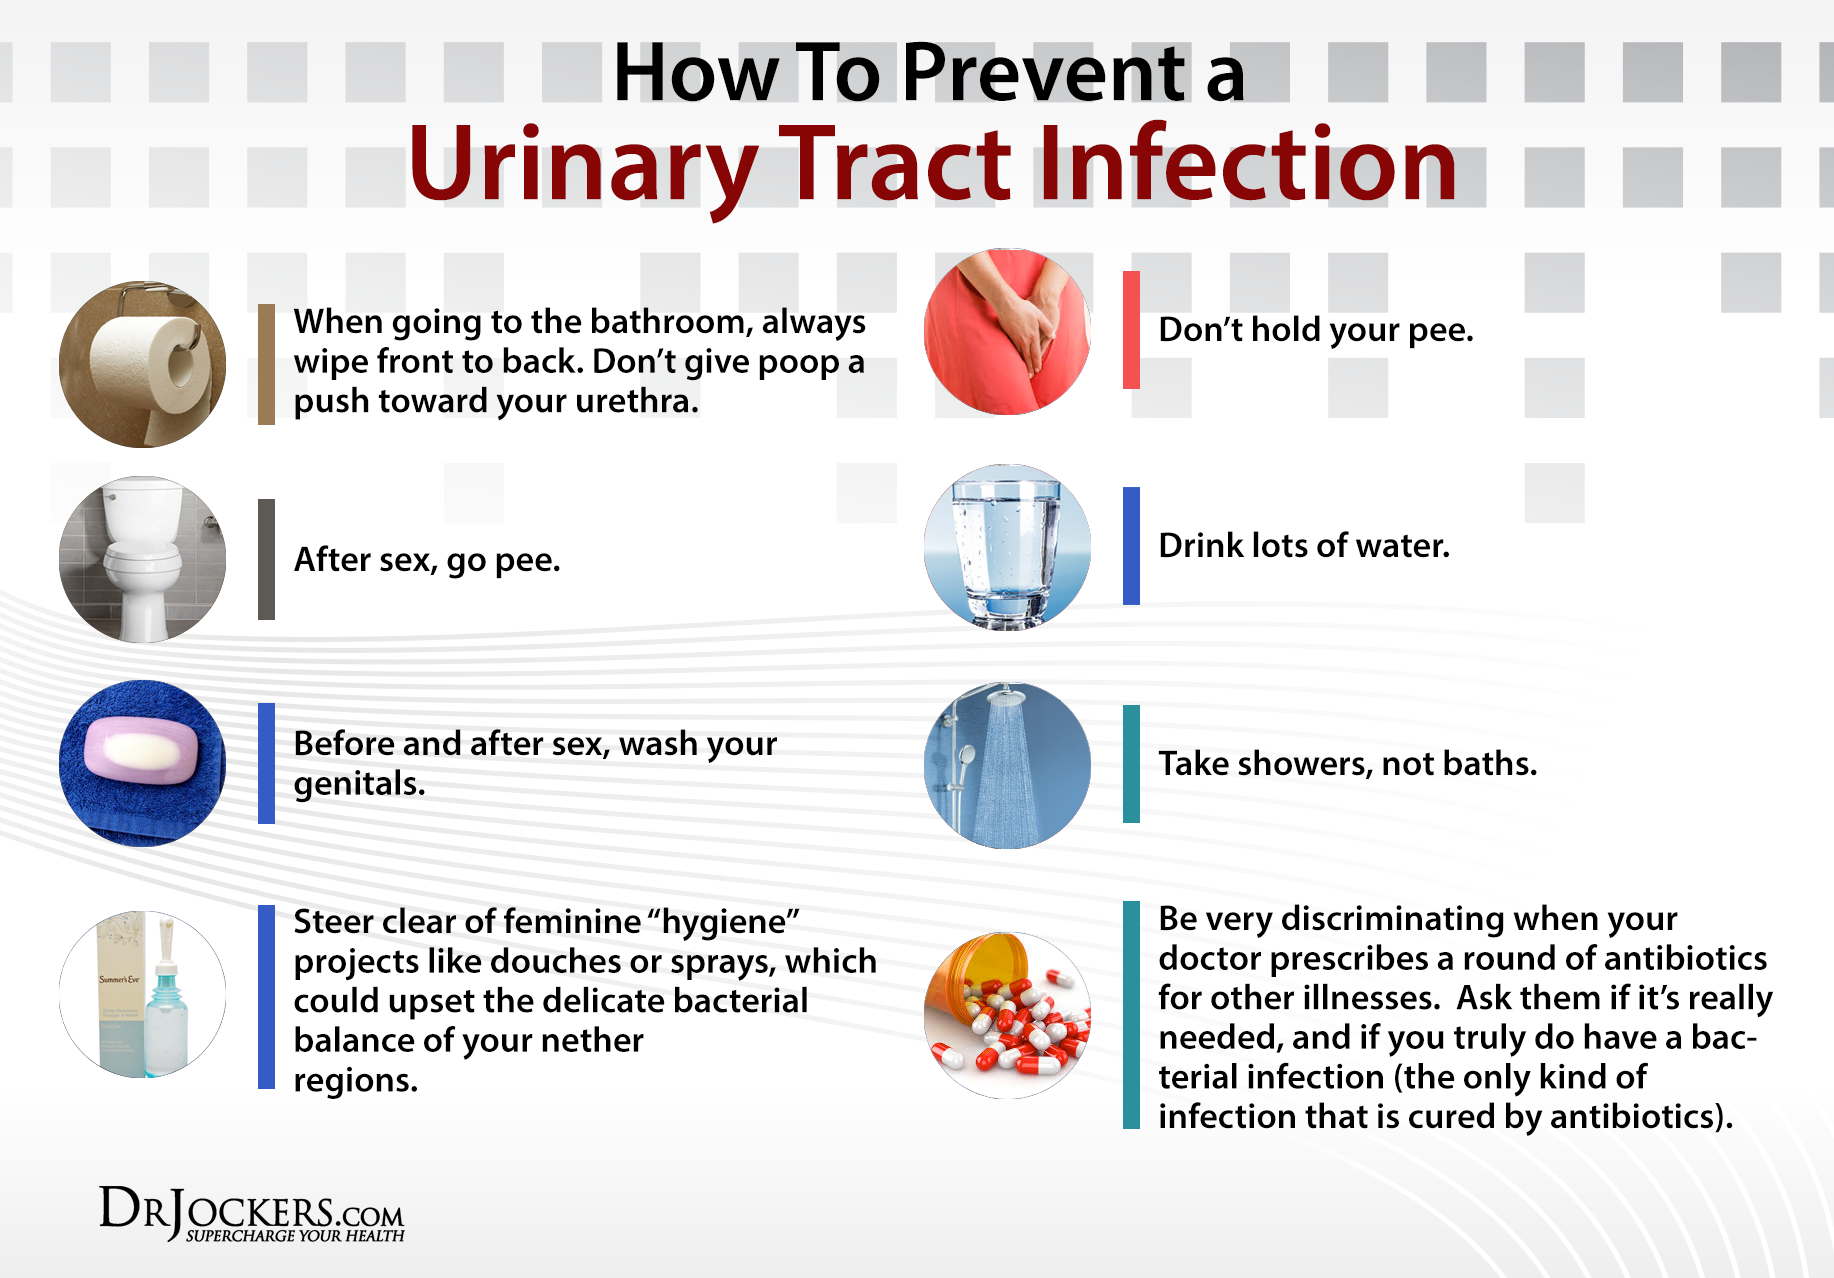 urinary health